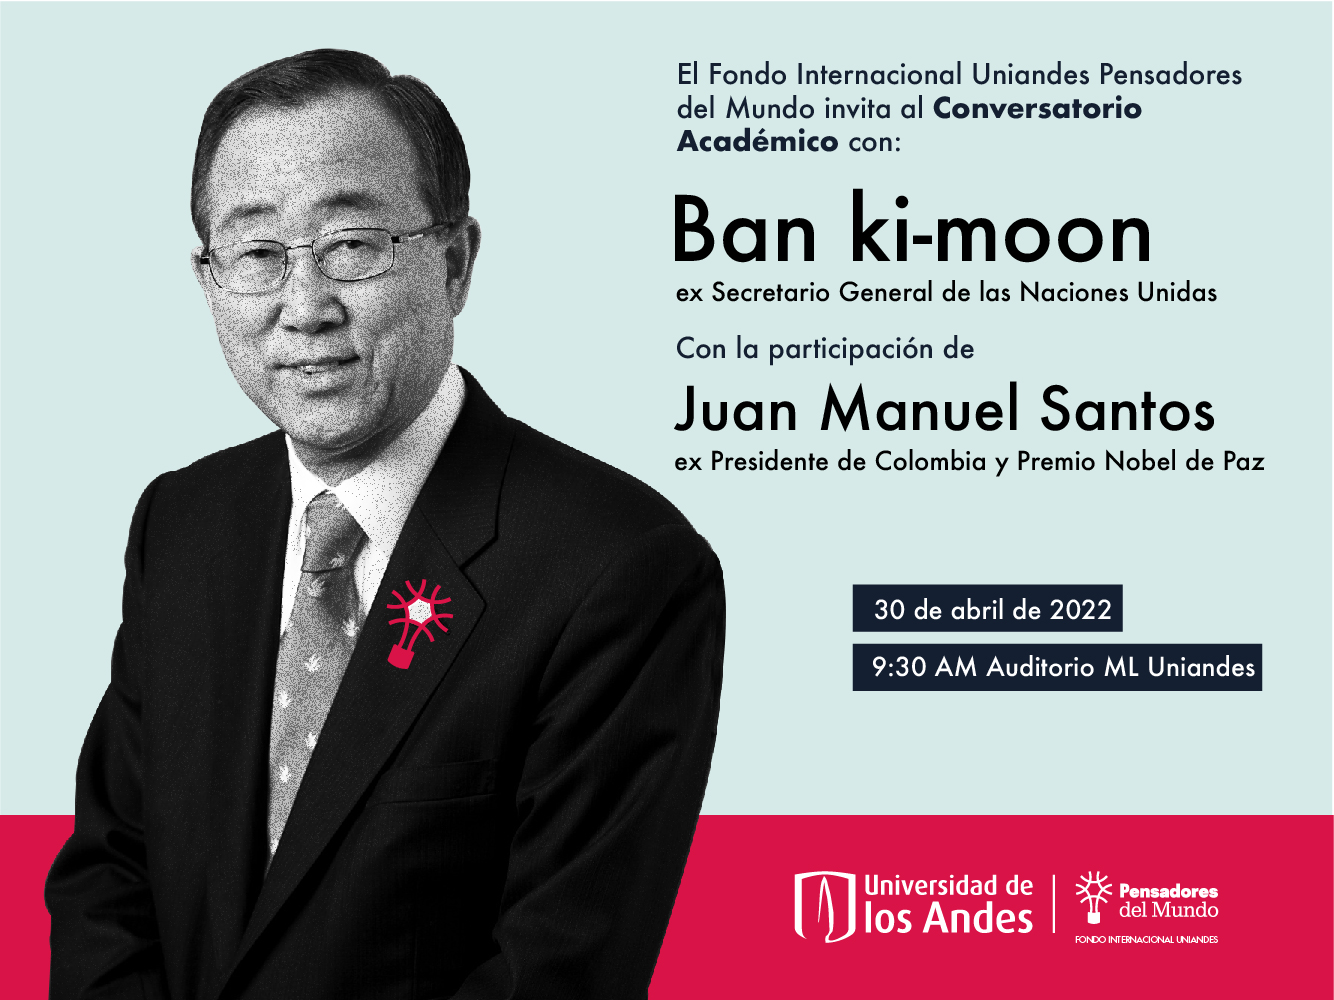 Conversatorio Ban Ki-moon